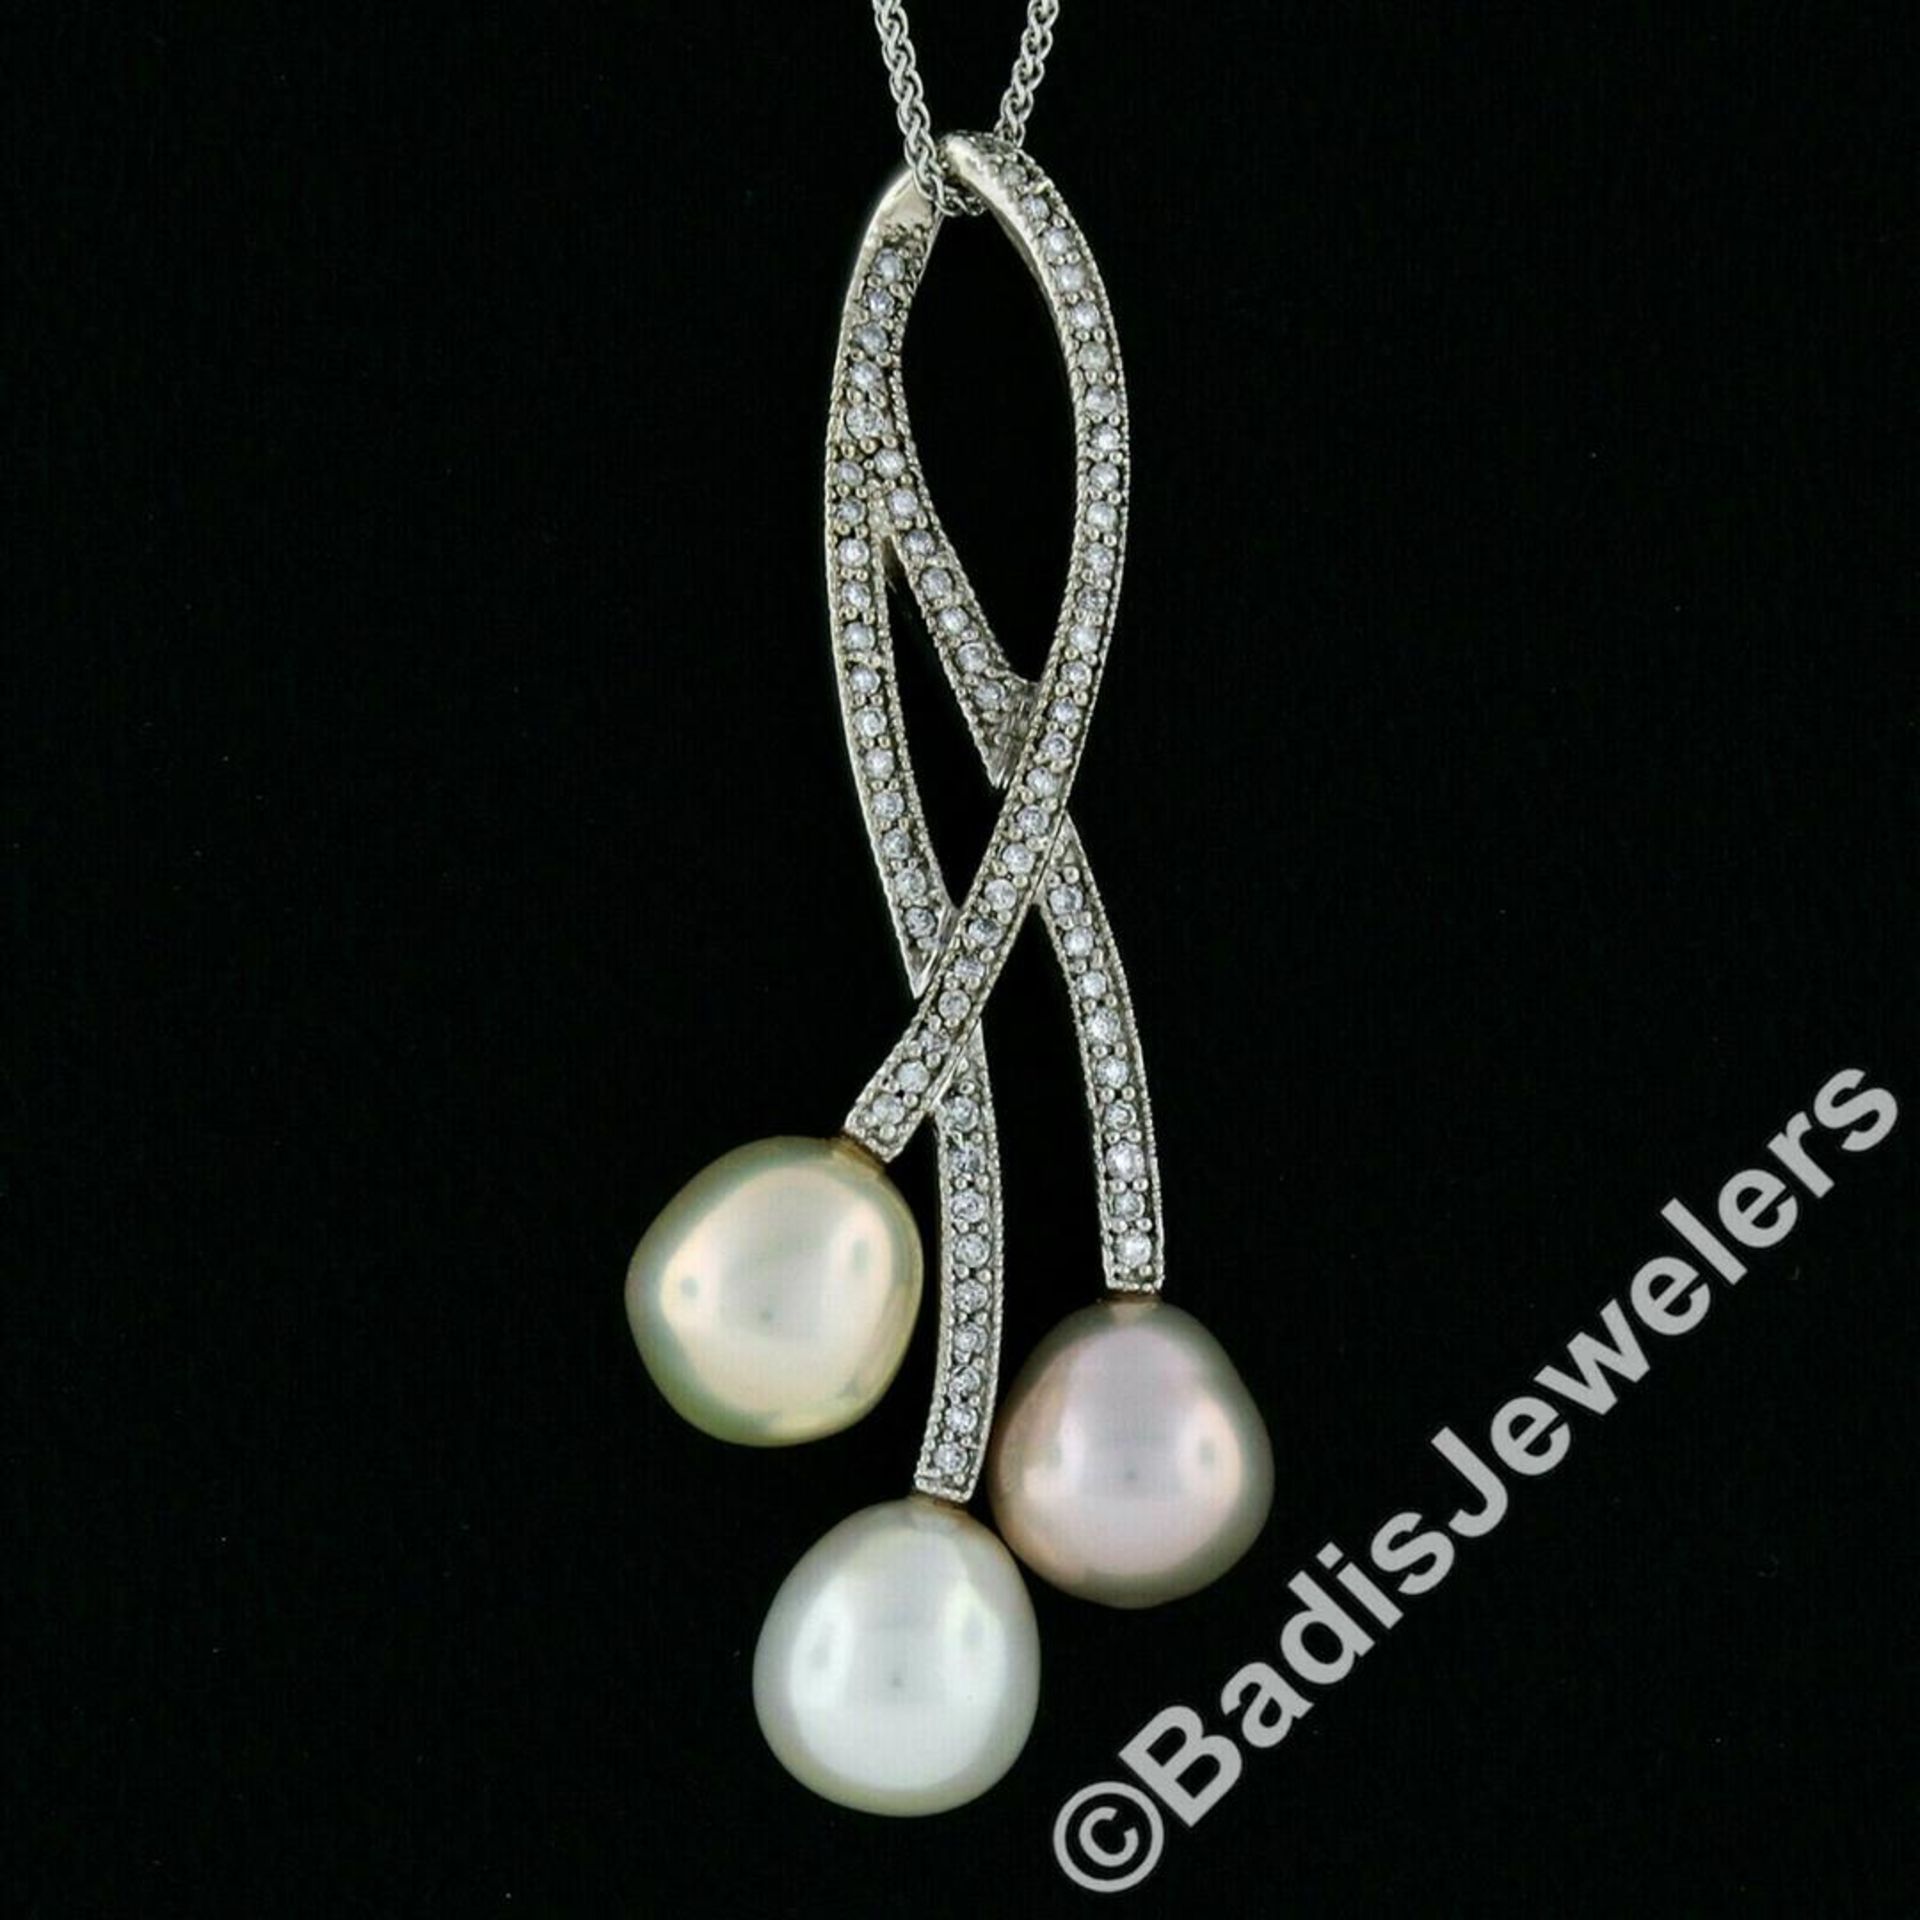 14kt White Gold 0.55 ctw Diamond & Tri-Color Pearl Tulip Flower Pendant Necklace - Image 2 of 7